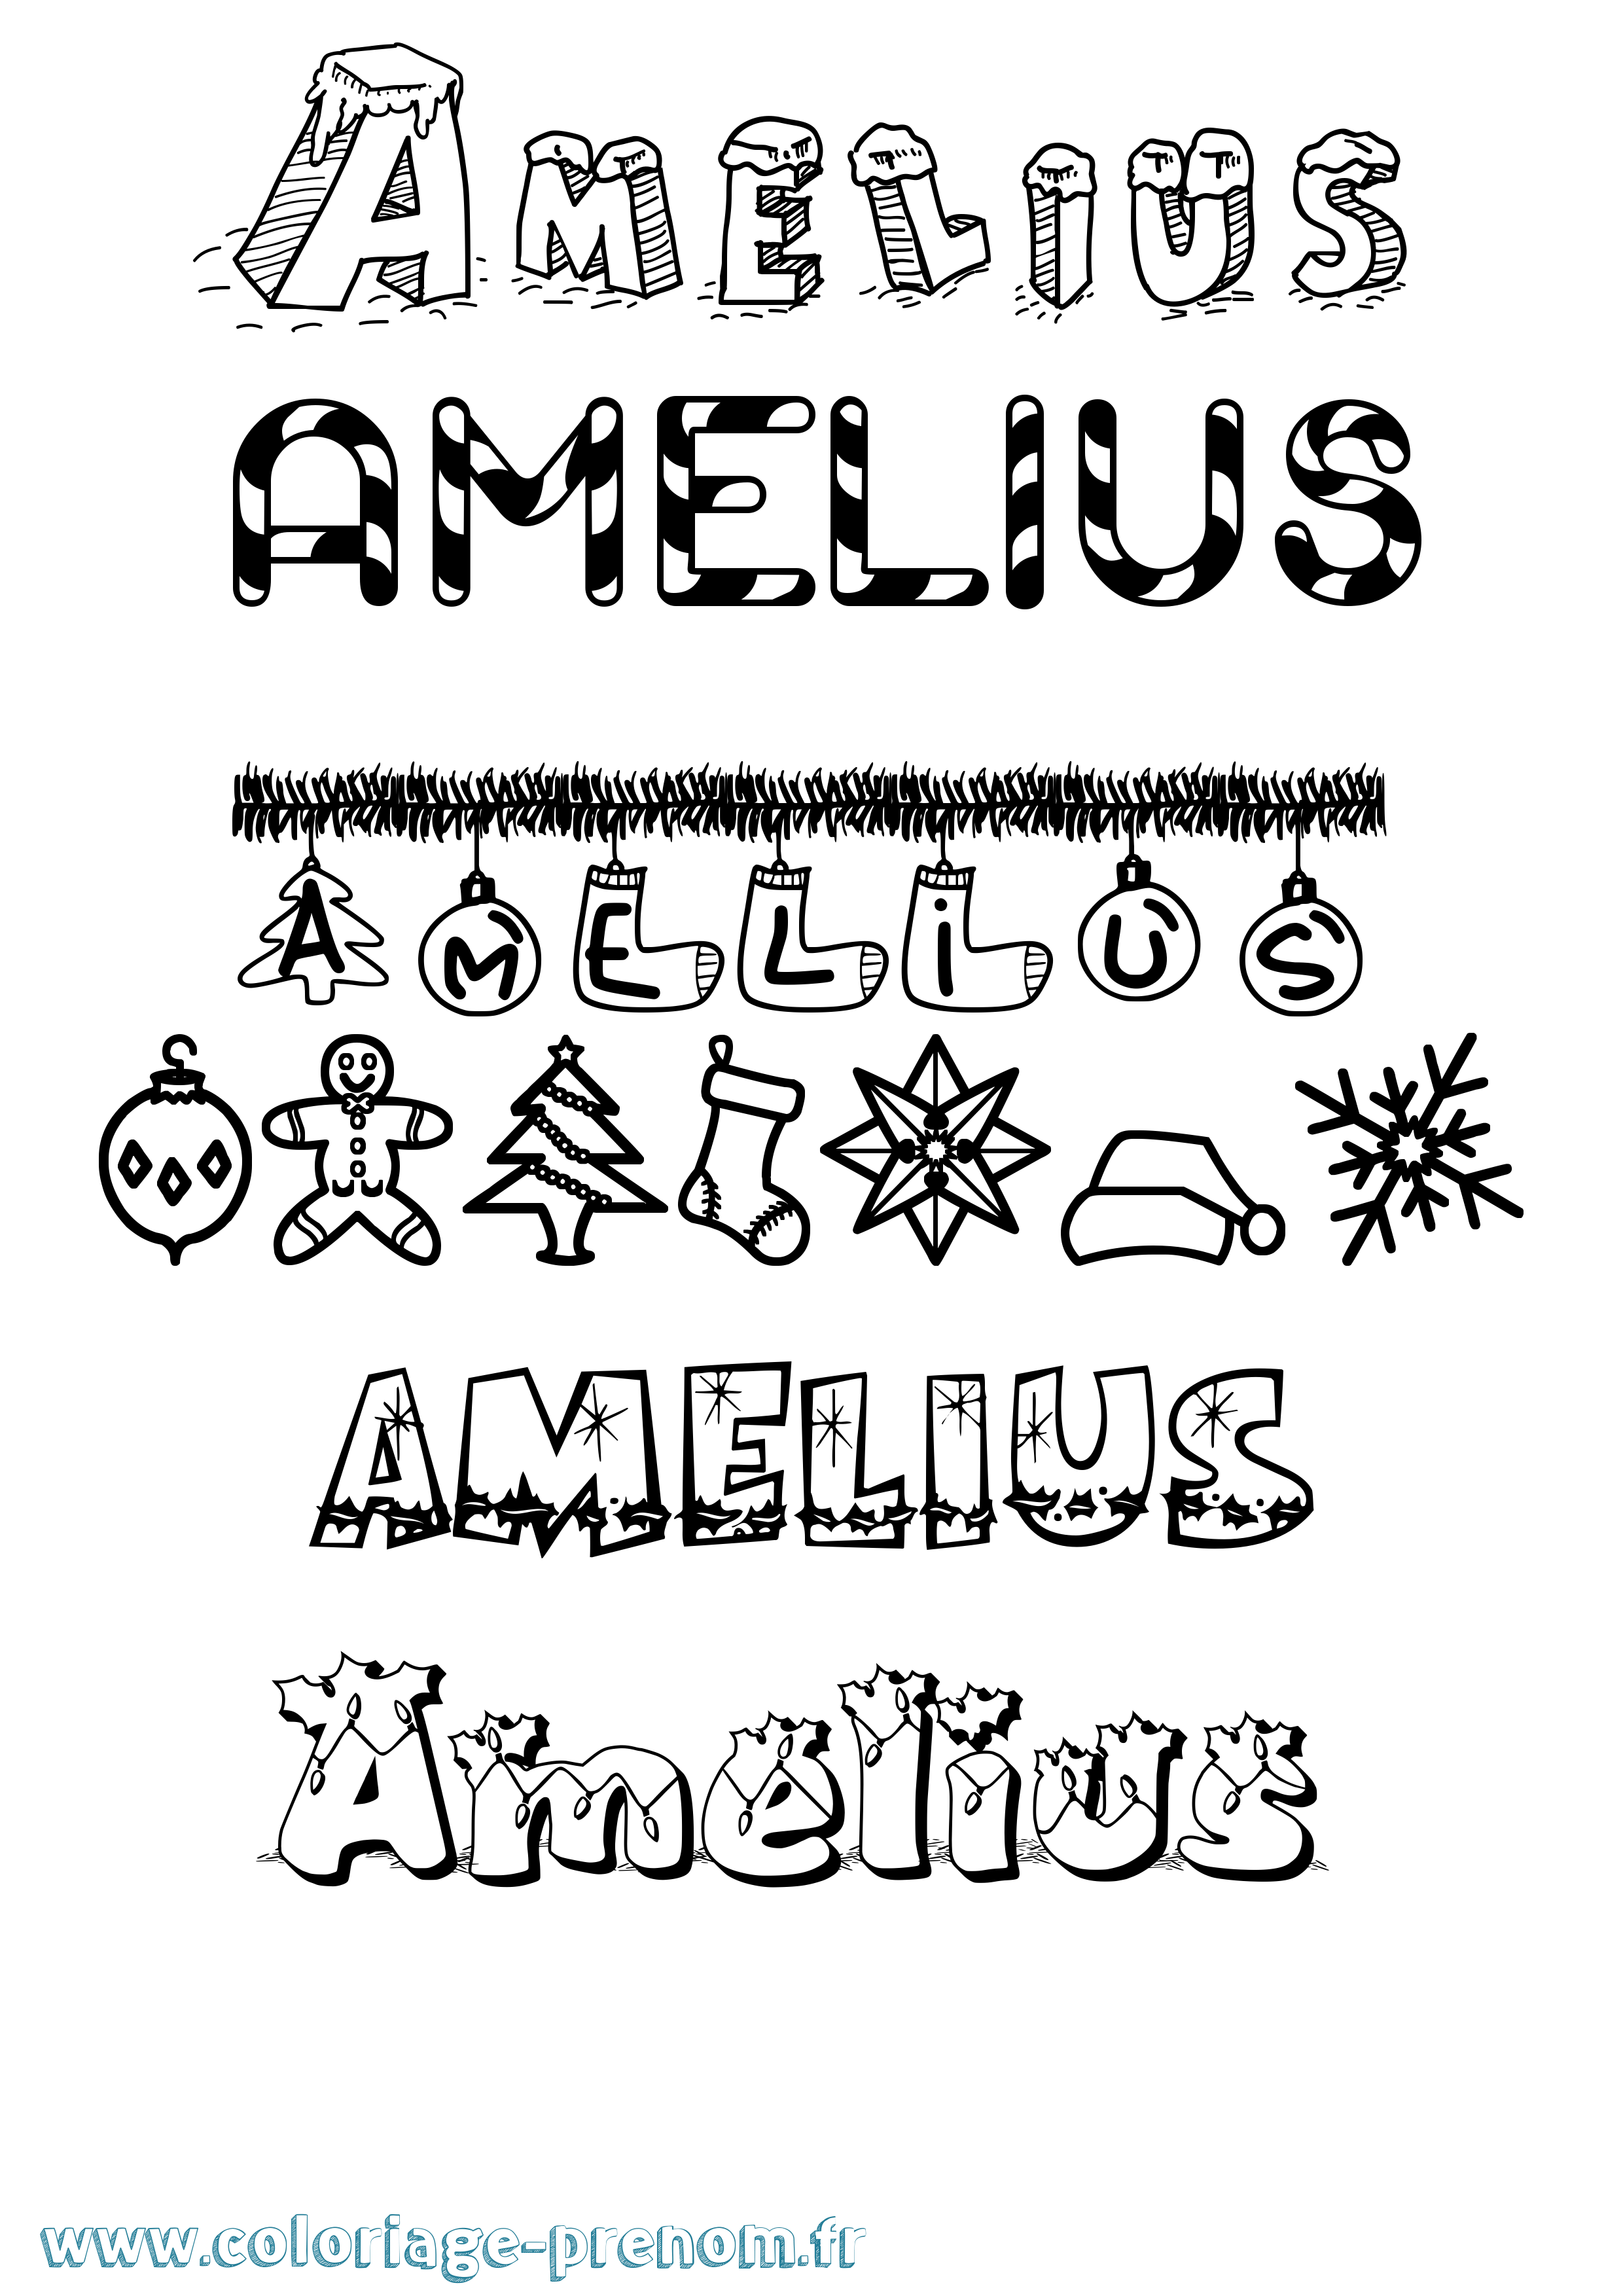 Coloriage prénom Amelius Noël